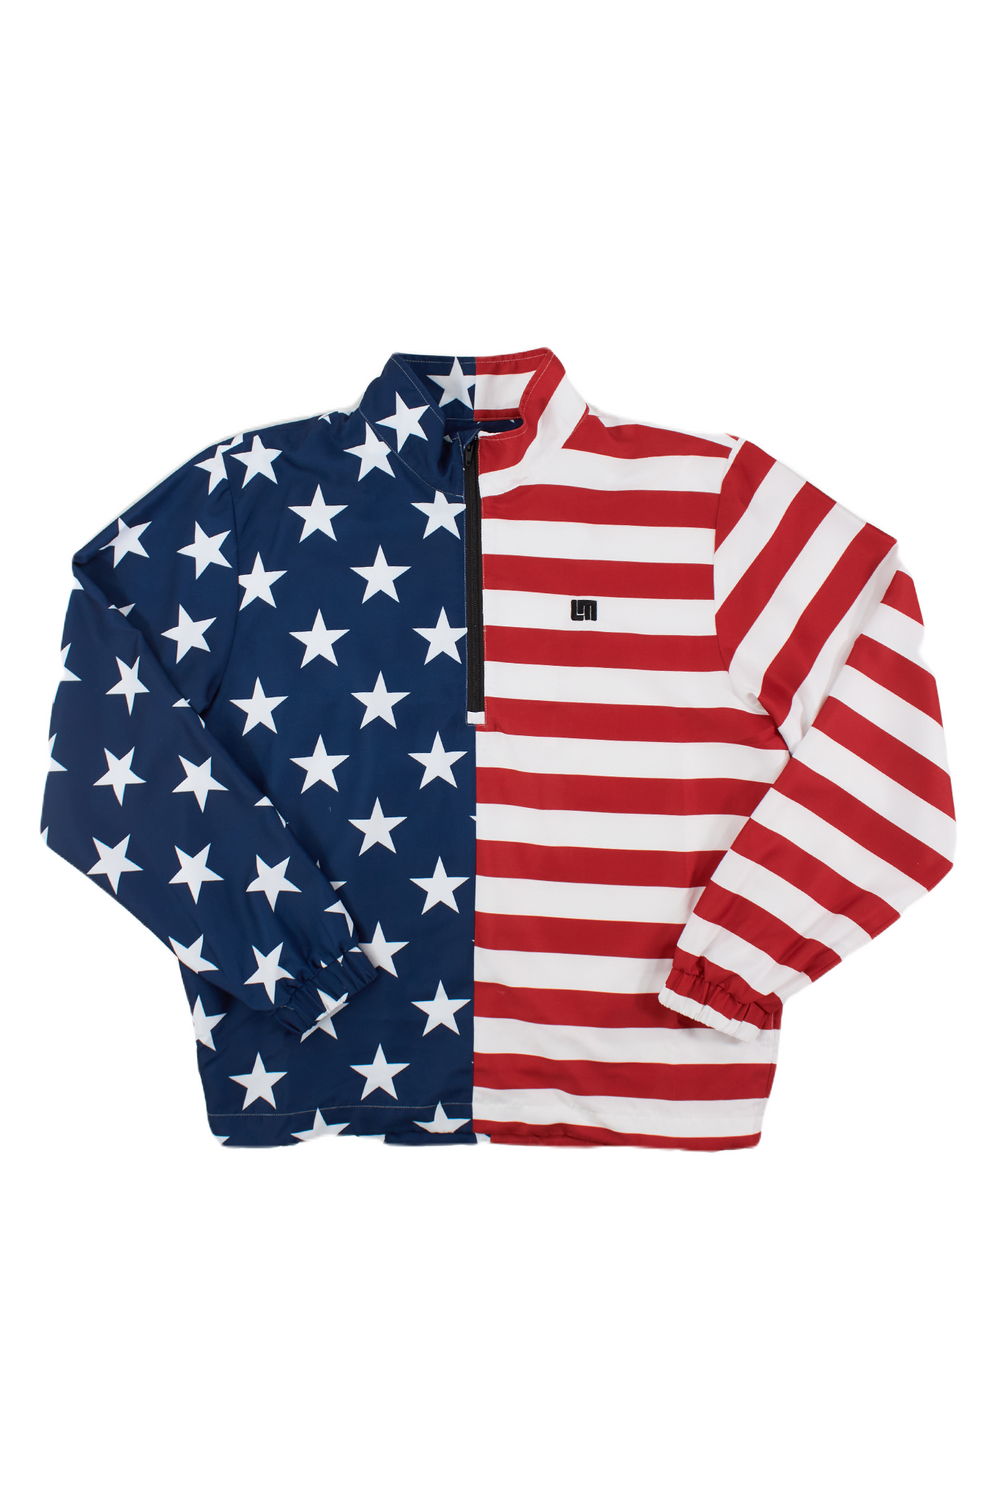 Quarter Zip Pullover - Stars & Stripes